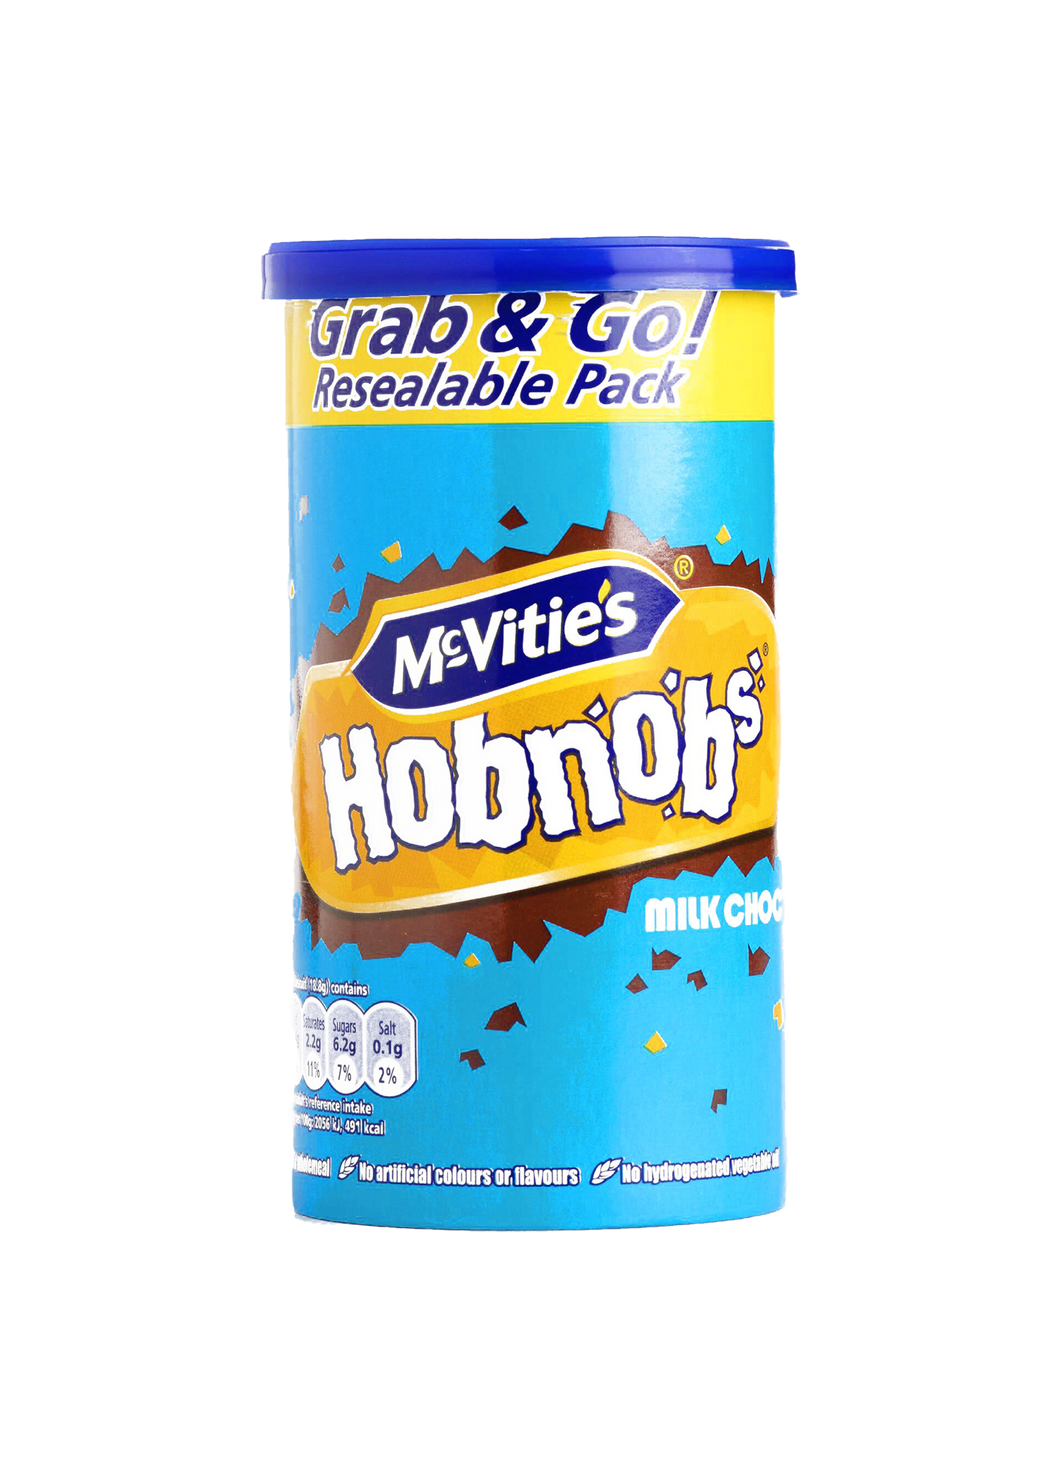 McVitie's Hobnob's Grab & Go! Milk Chocolate 205g